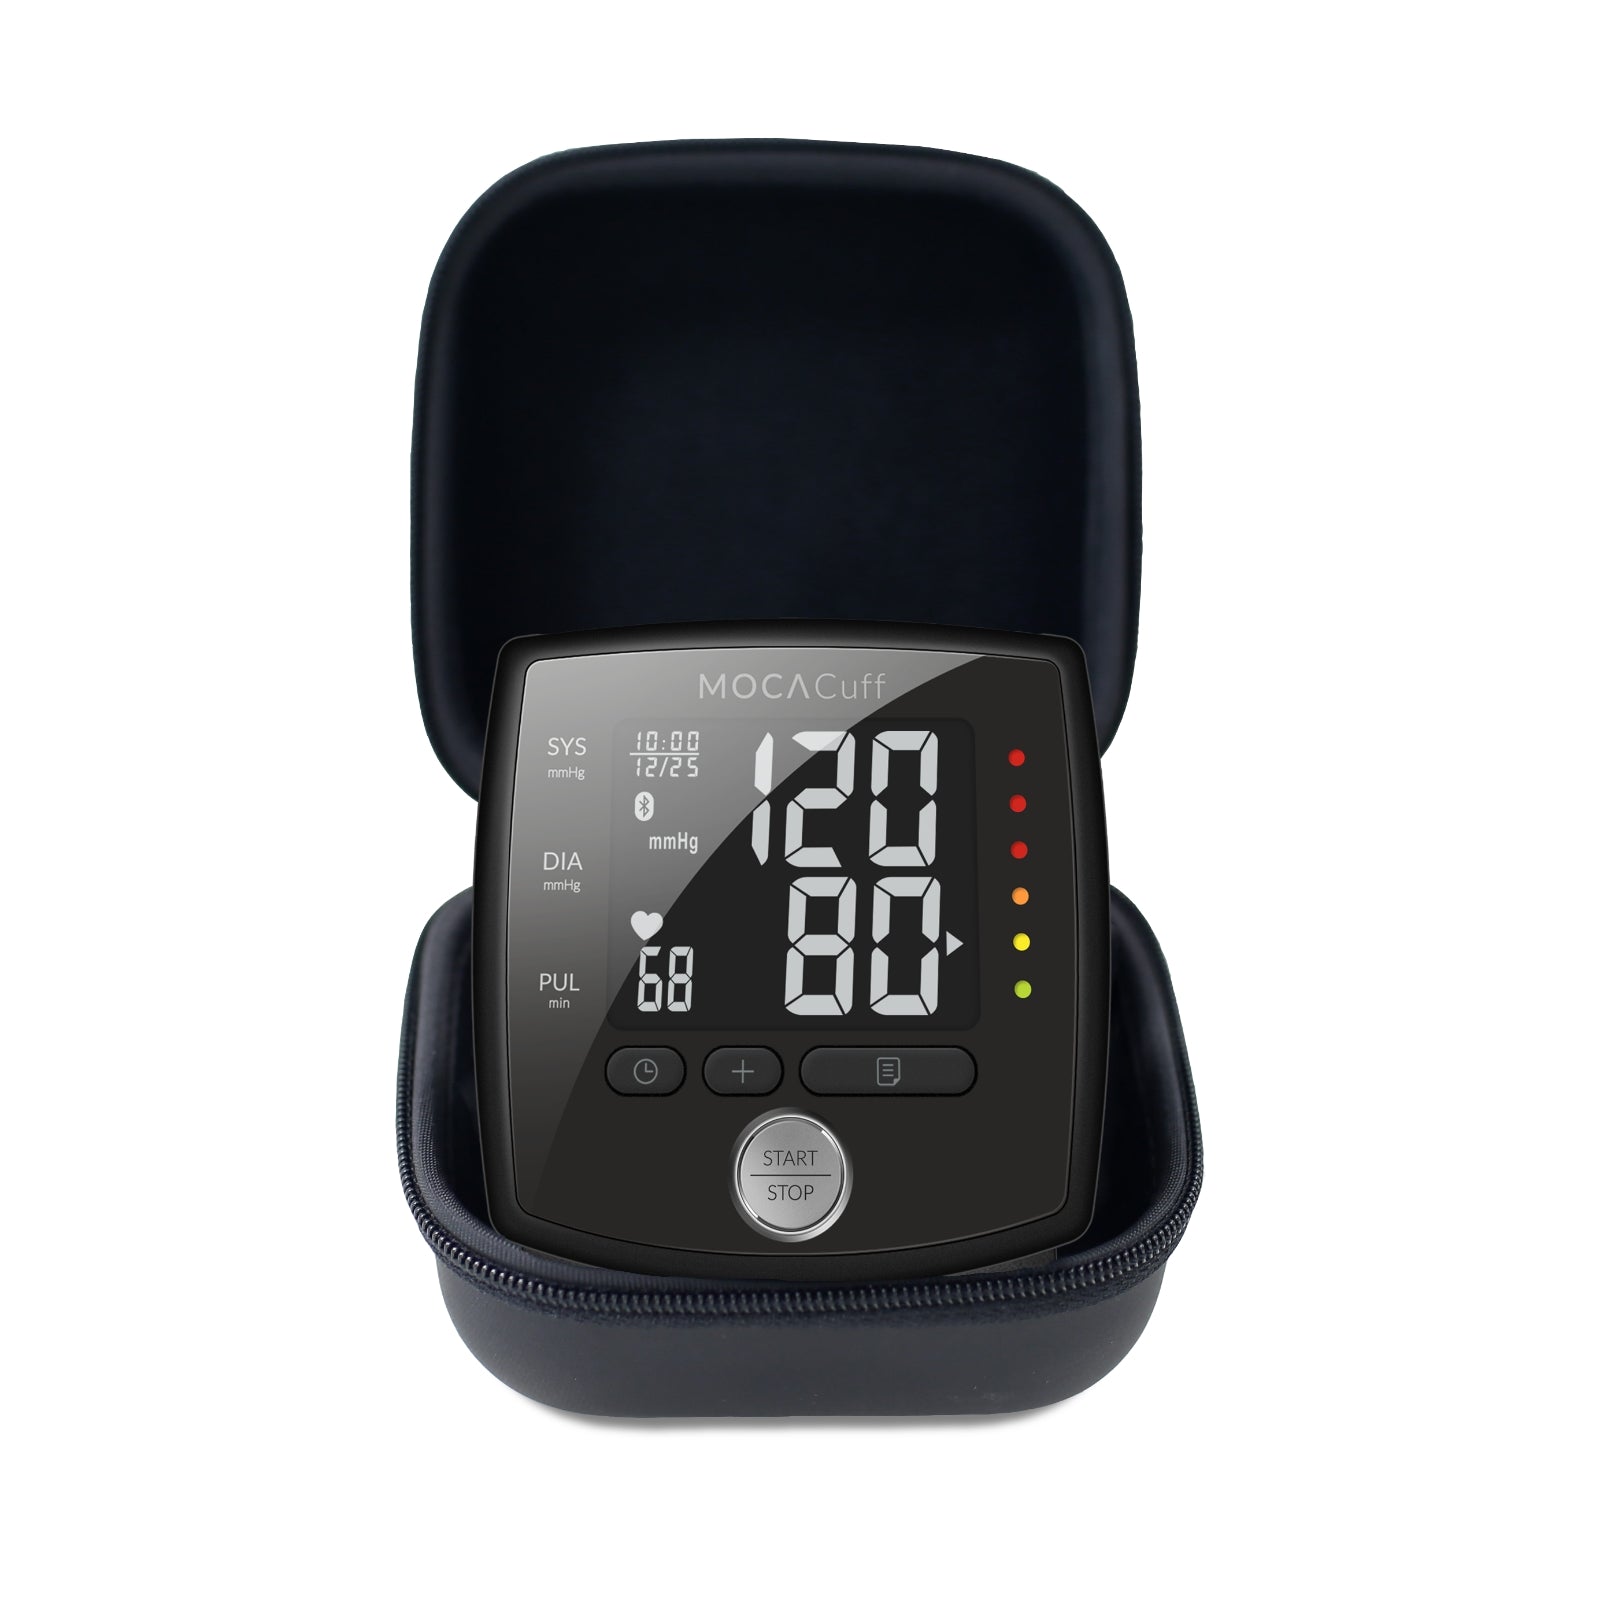 LIFEHOOD Wrist Blood Pressure Monitor for Home Use, 13.5-21.5cm Automatic  Blood Pressure Cuff Wrist - CE, FDA, CA Approved Bluetooth Blood Pressure